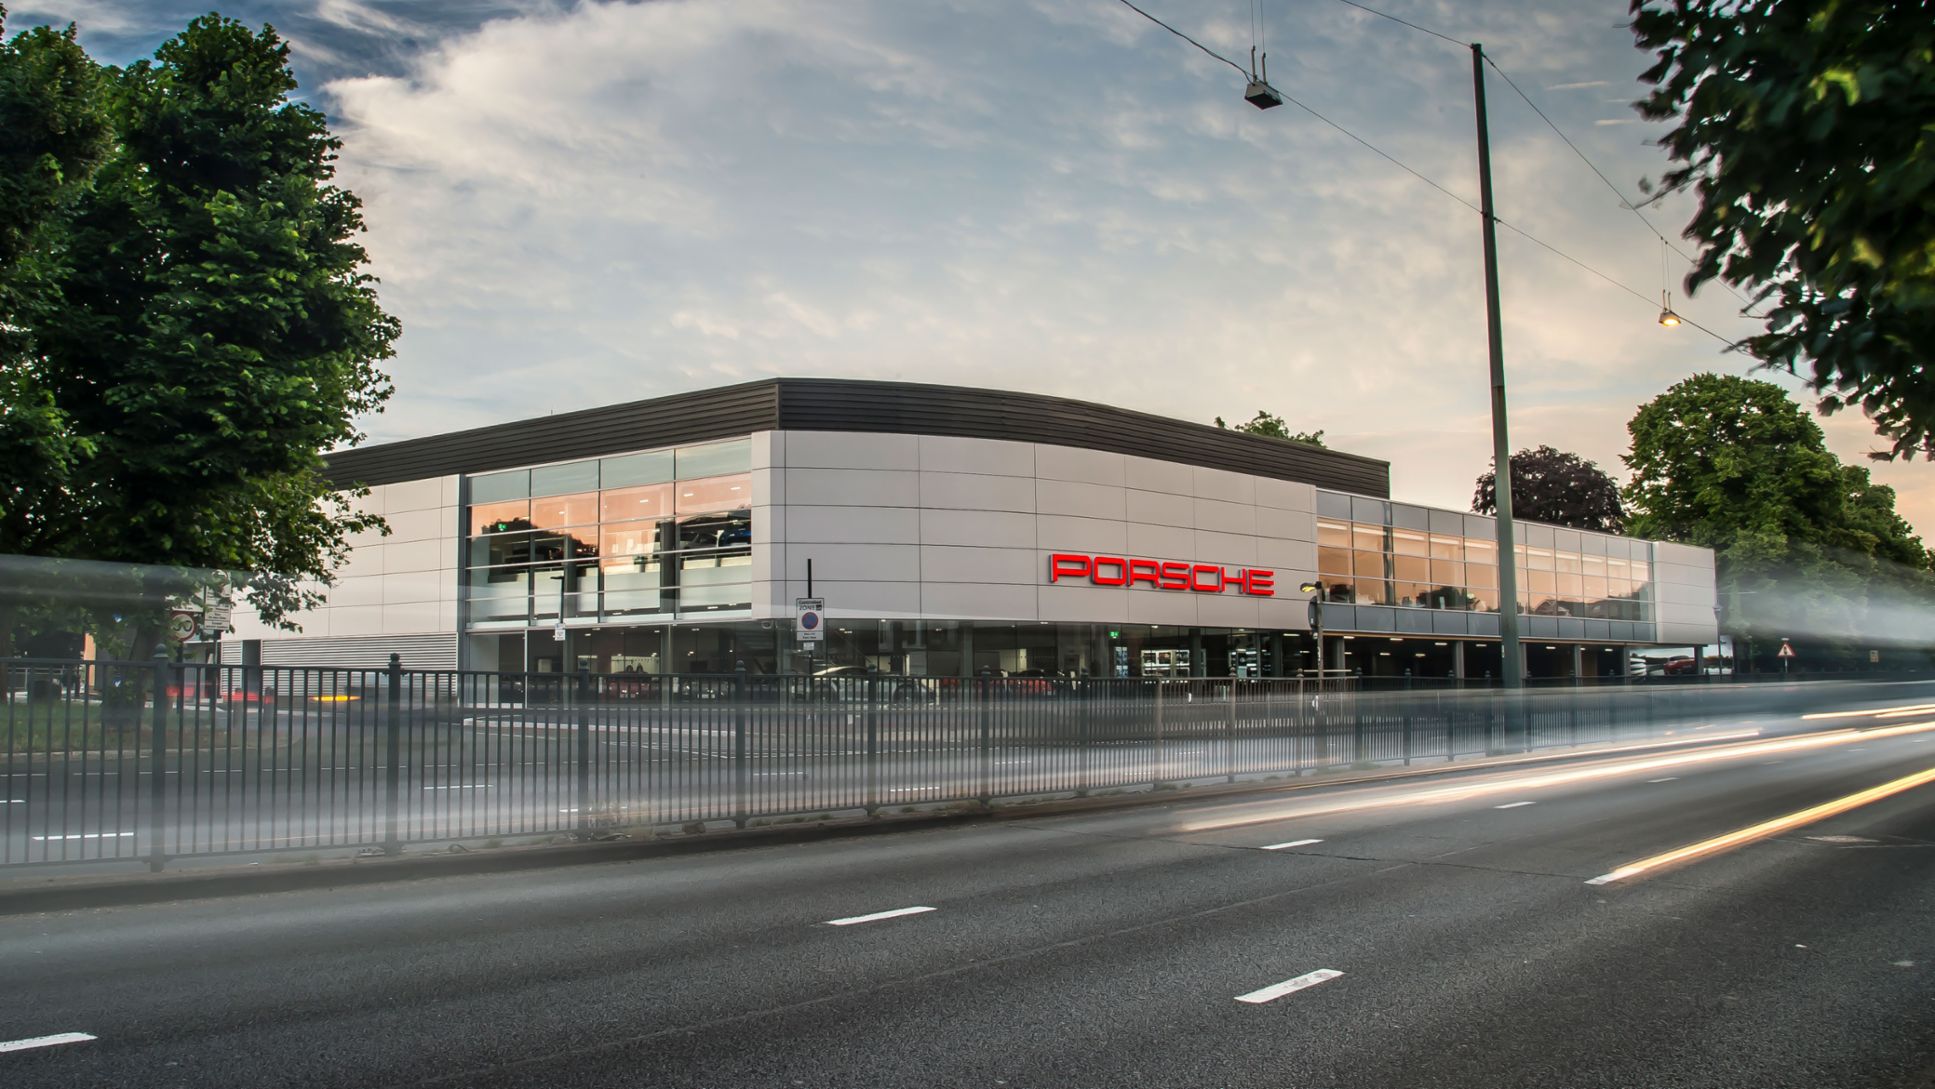 Porsche trade and service centre, Chiswick, 2016, Porsche AG